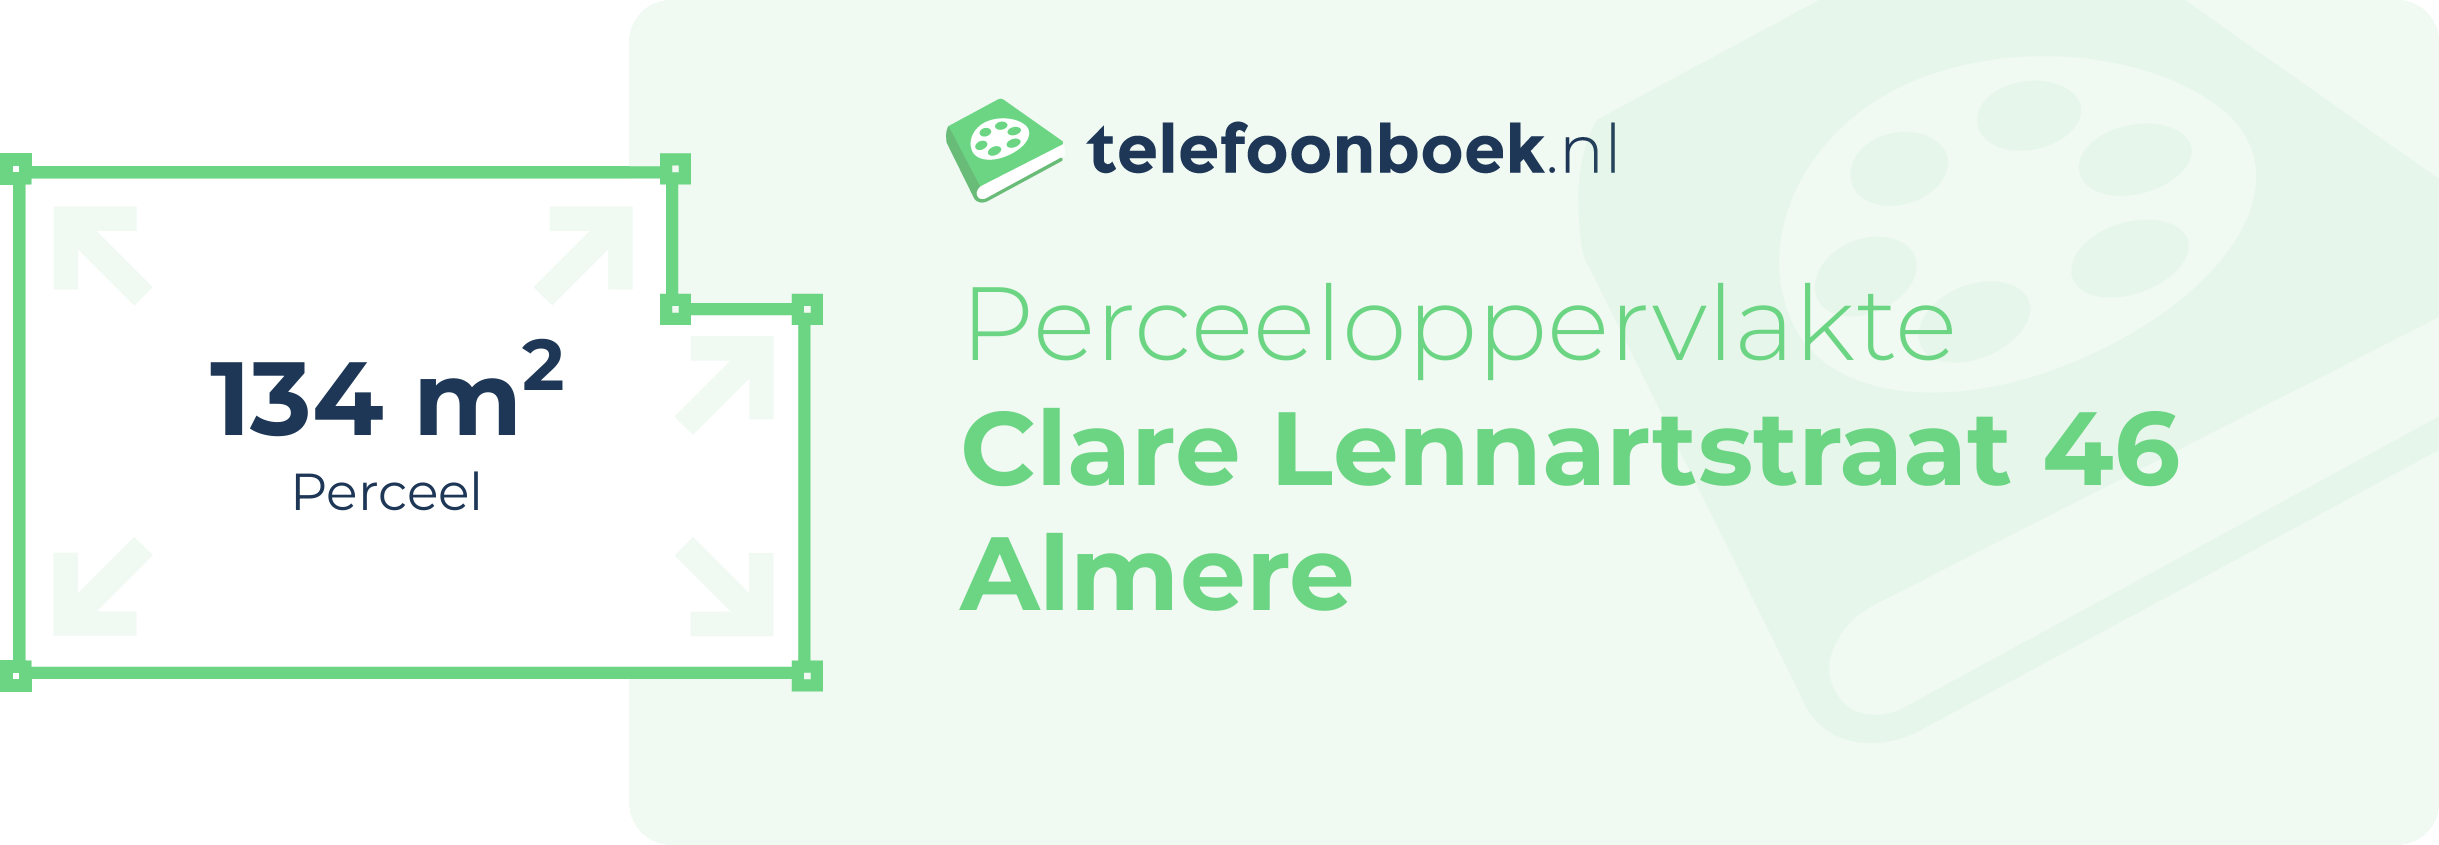 Perceeloppervlakte Clare Lennartstraat 46 Almere